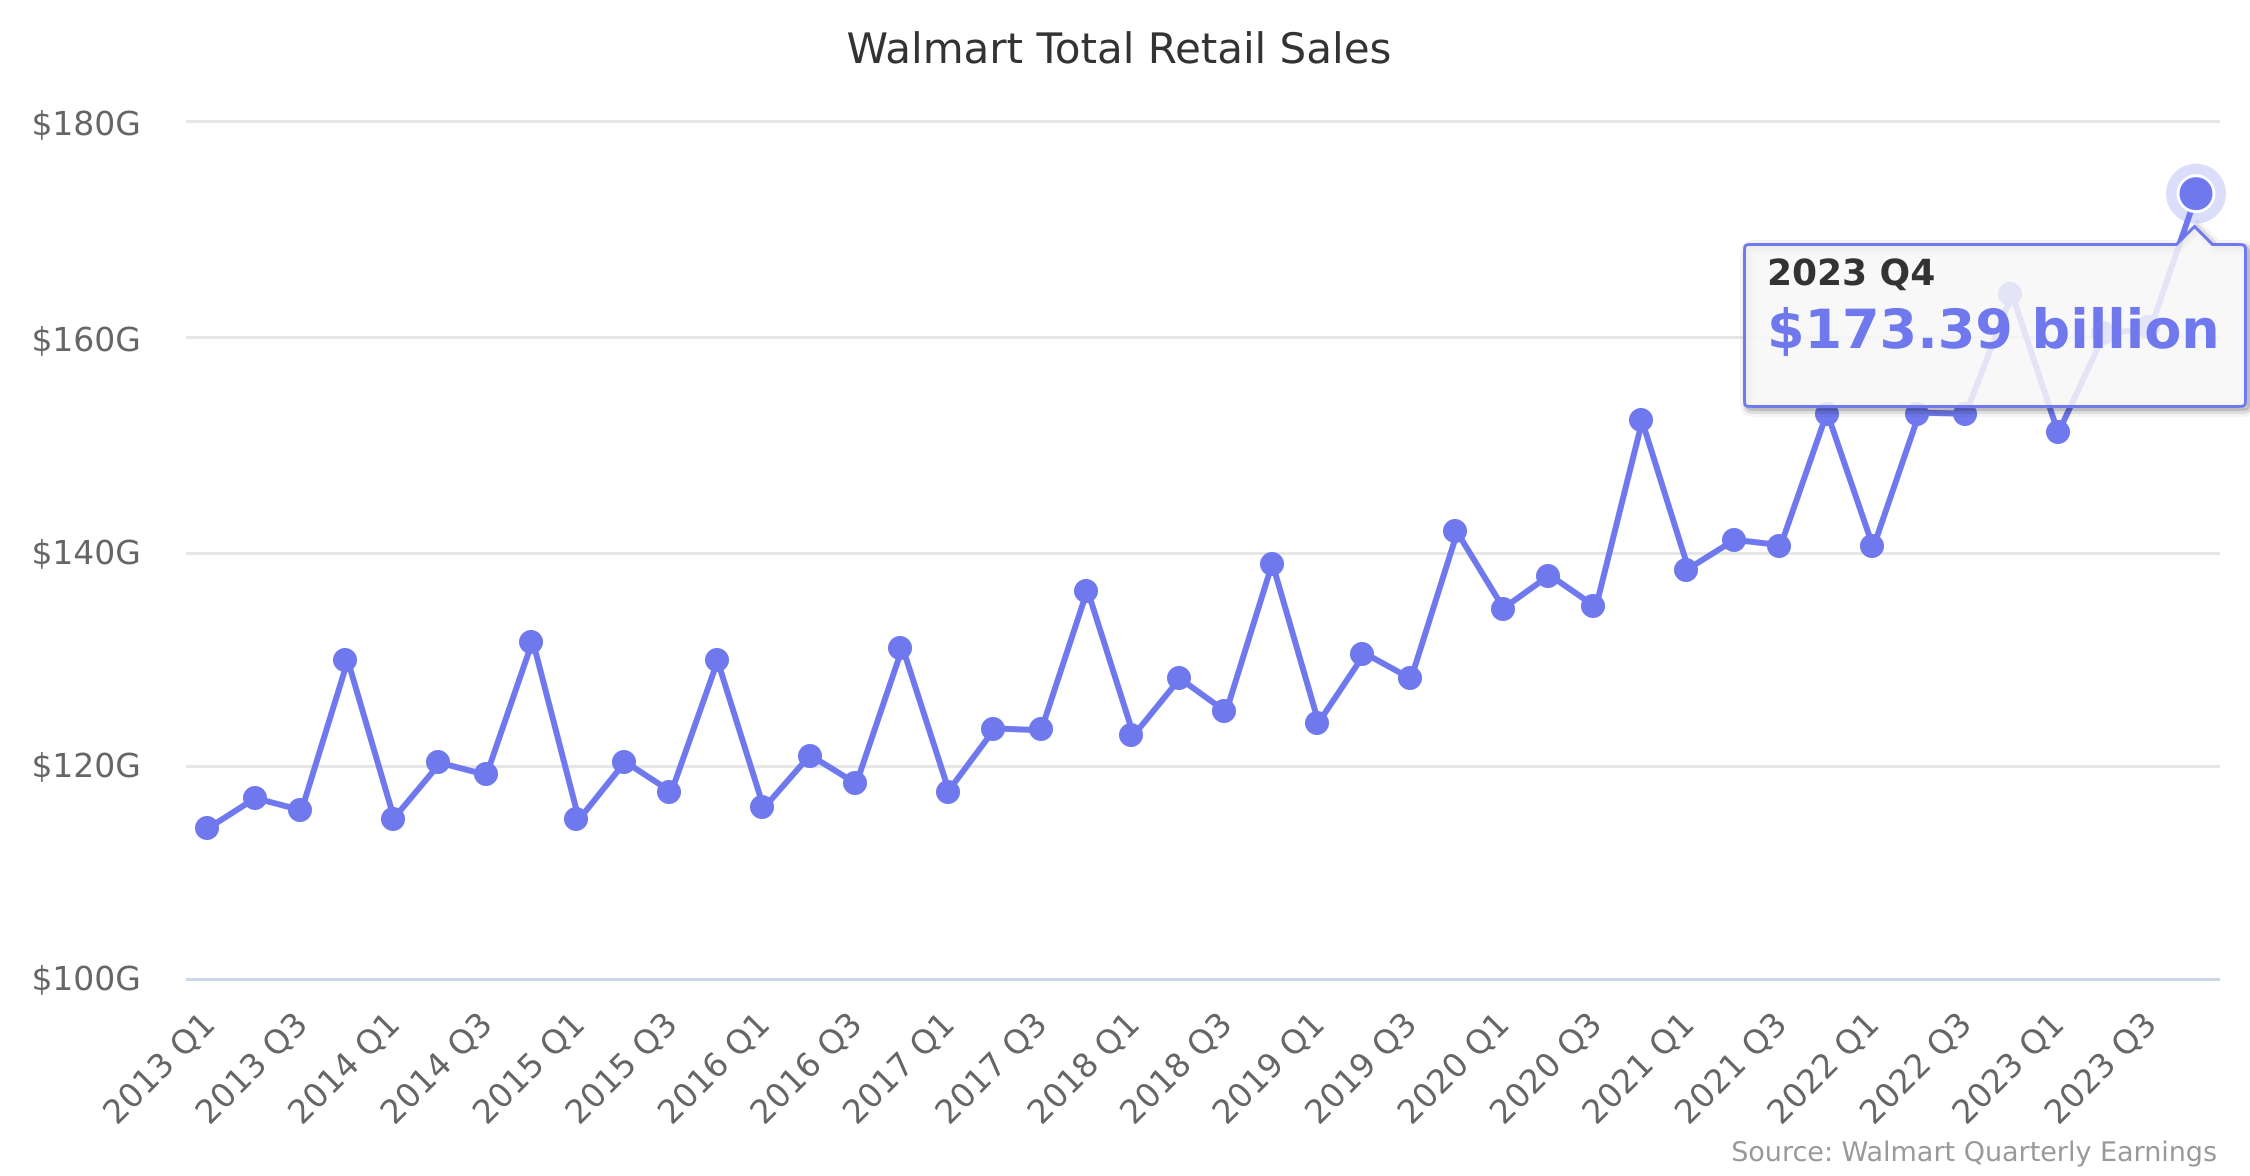 Walmart Total Retail Sales 2013-2023